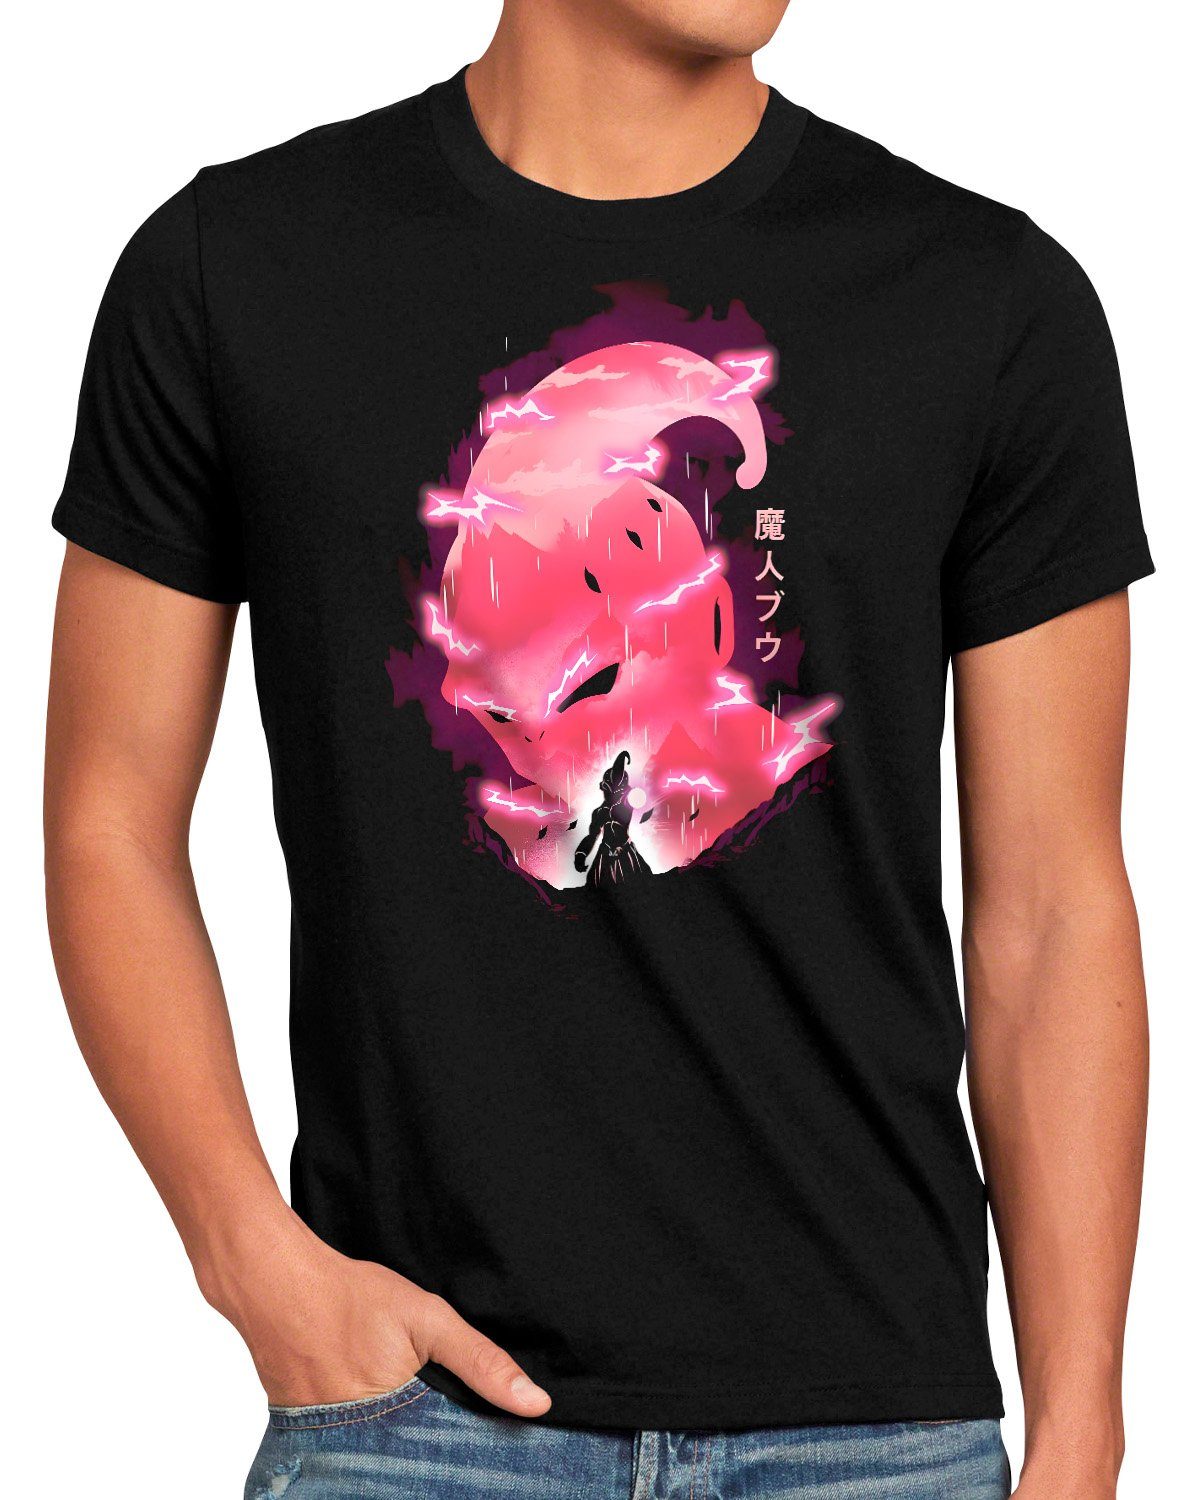 the Print-Shirt dragonball Supremacy z gt songoku breakers kakarot T-Shirt Herren super style3 Pink